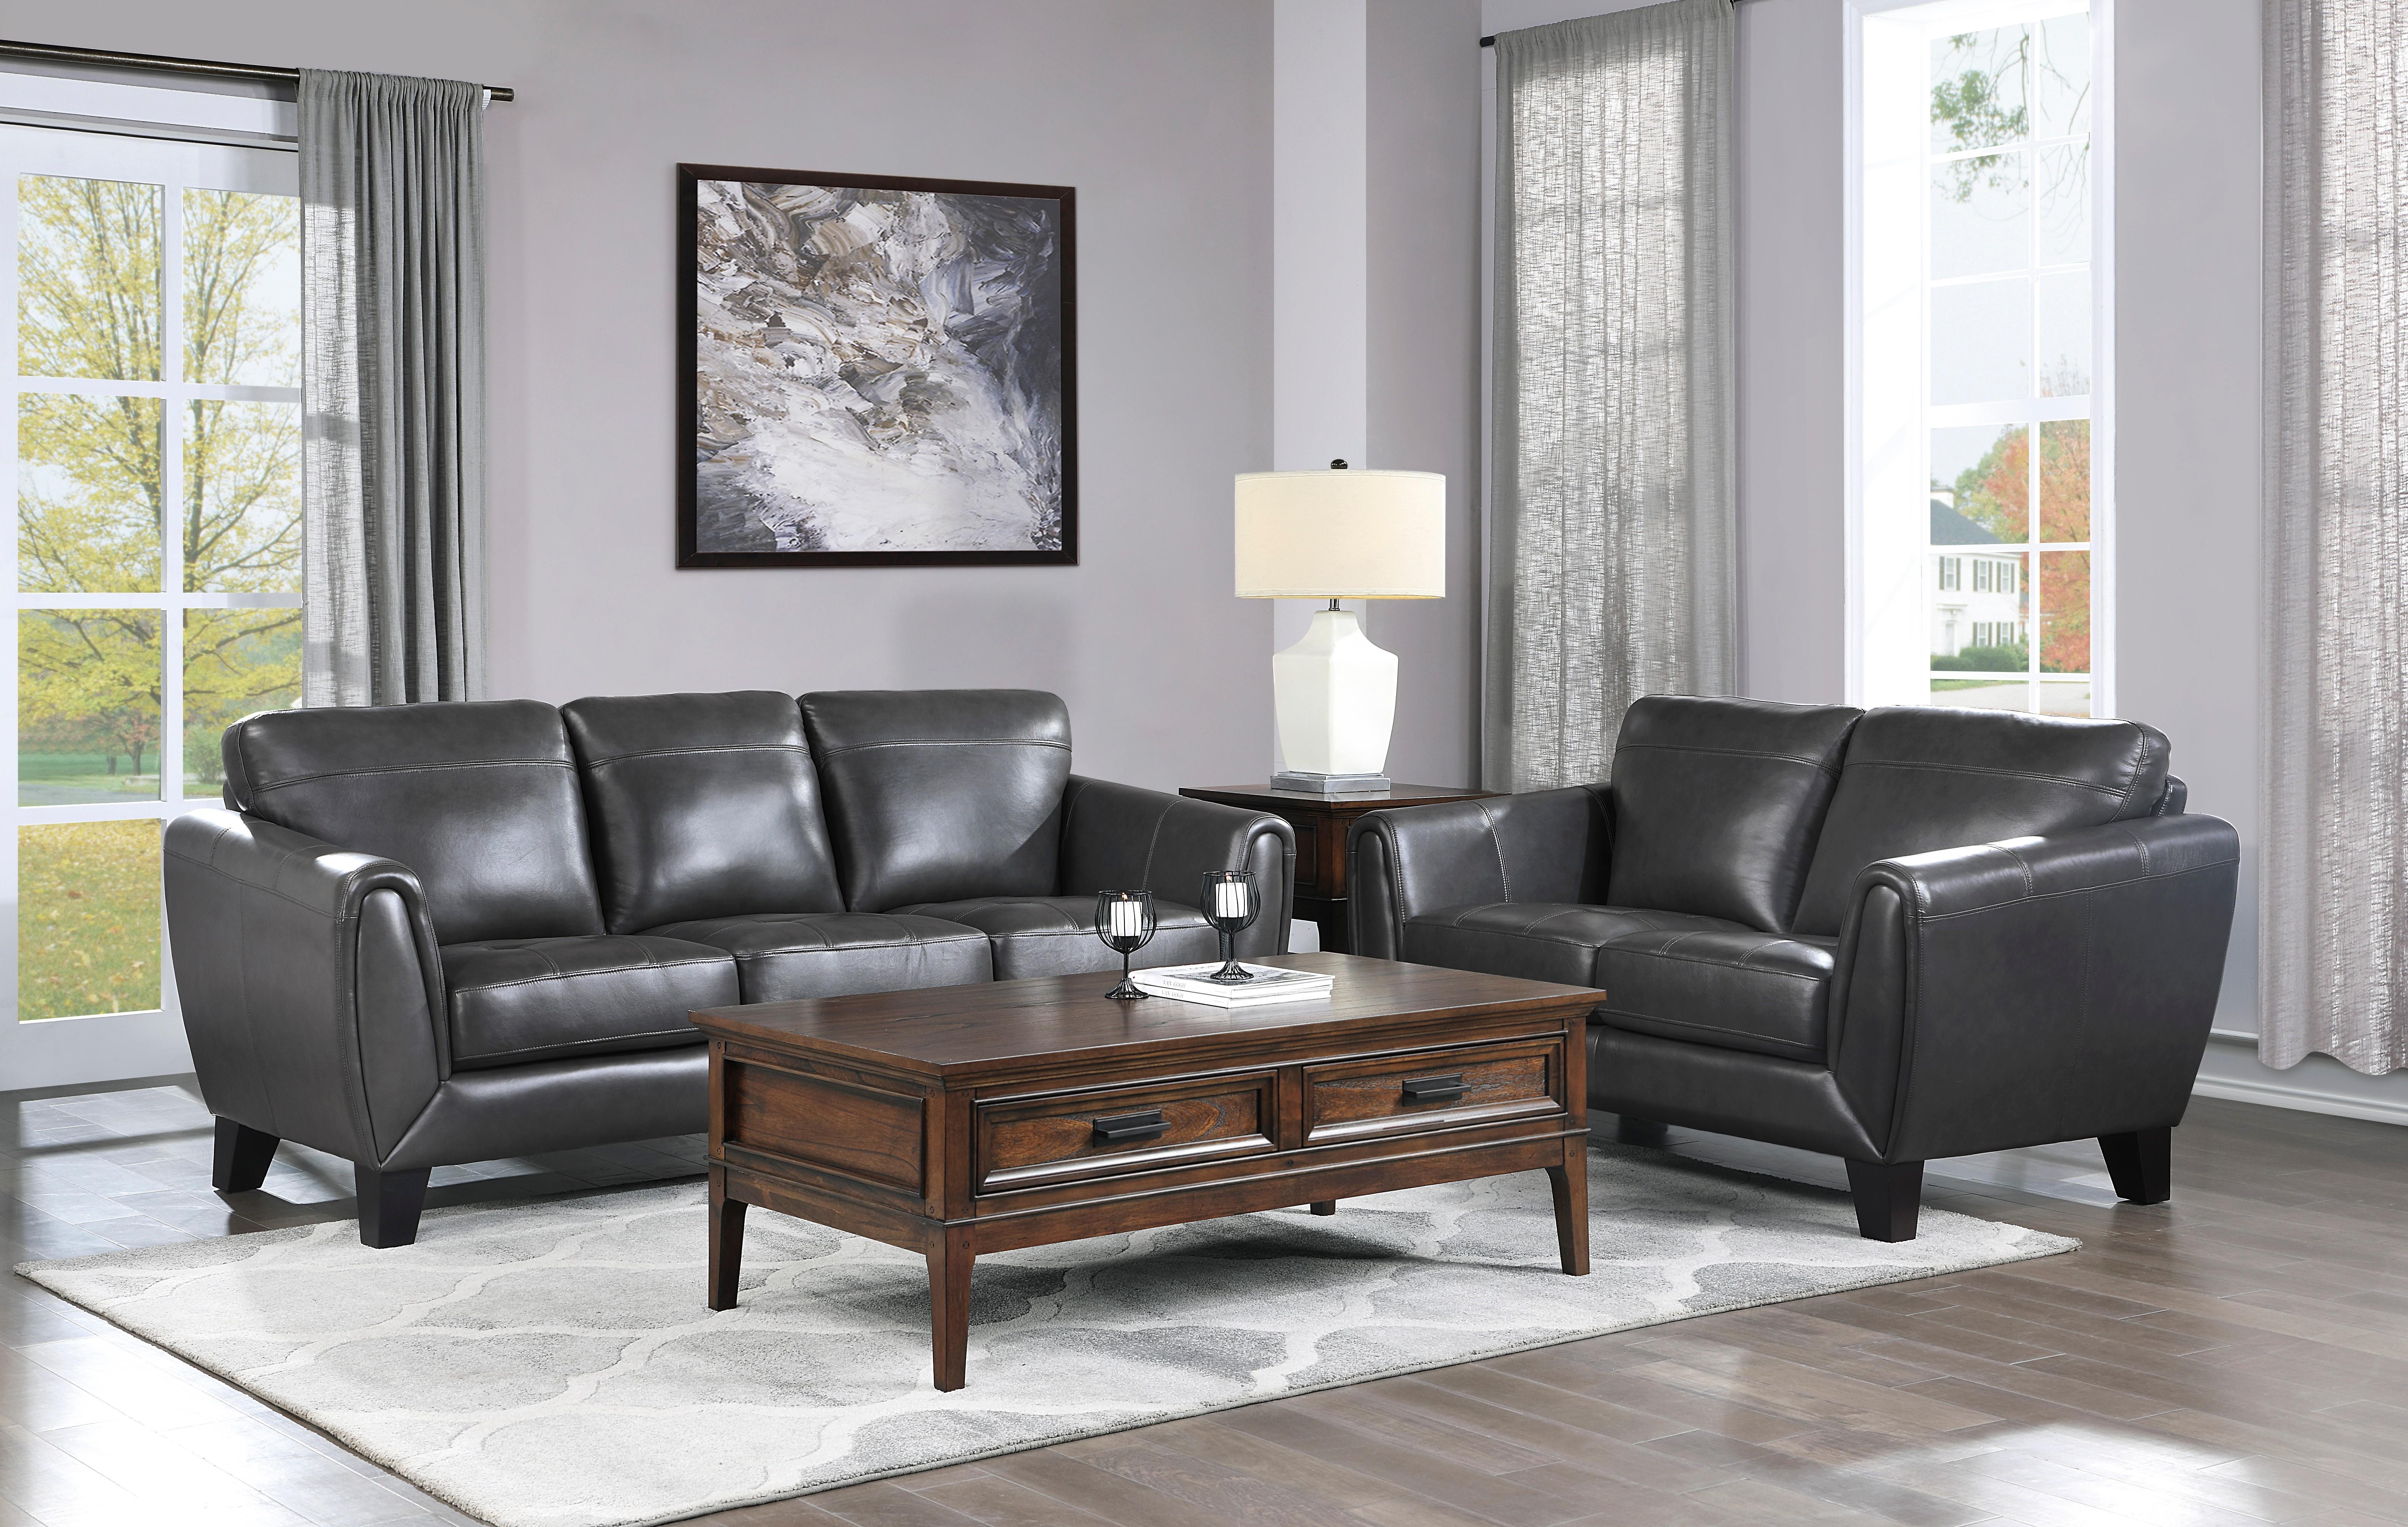 Modern Living Room Set 9460DG-2PC Spivey 9460DG-2PC in Dark Gray Leather